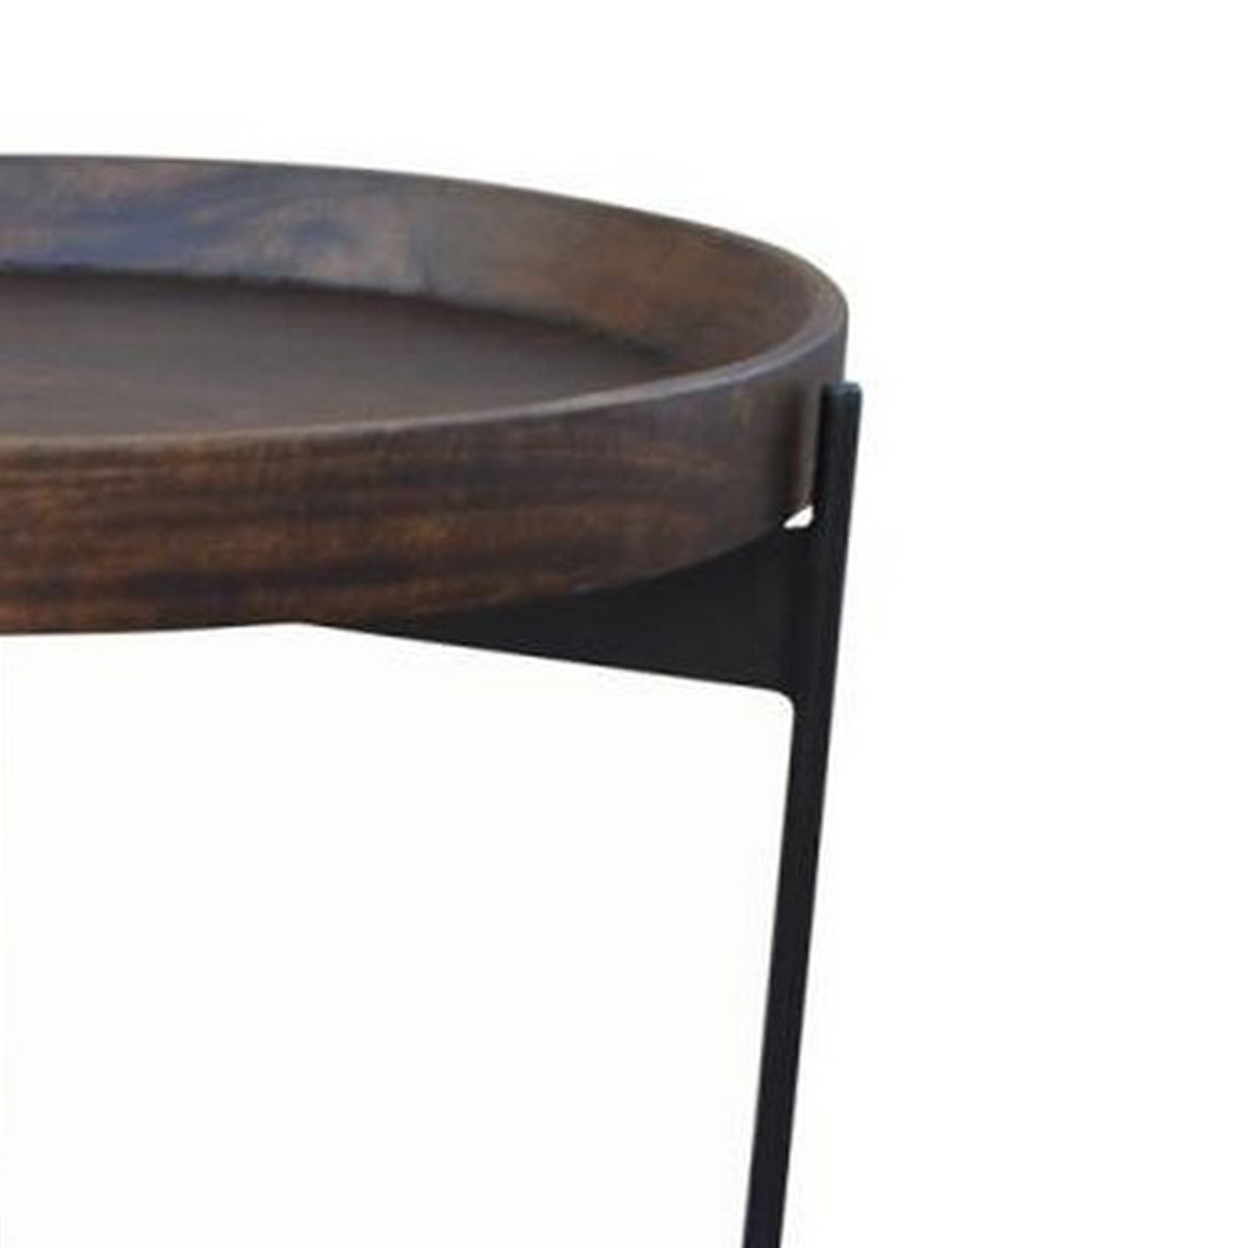 24 Inch Round Side Table, Dark Brown Mango Wood Tray Top, Black Iron Legs- Saltoro Sherpi